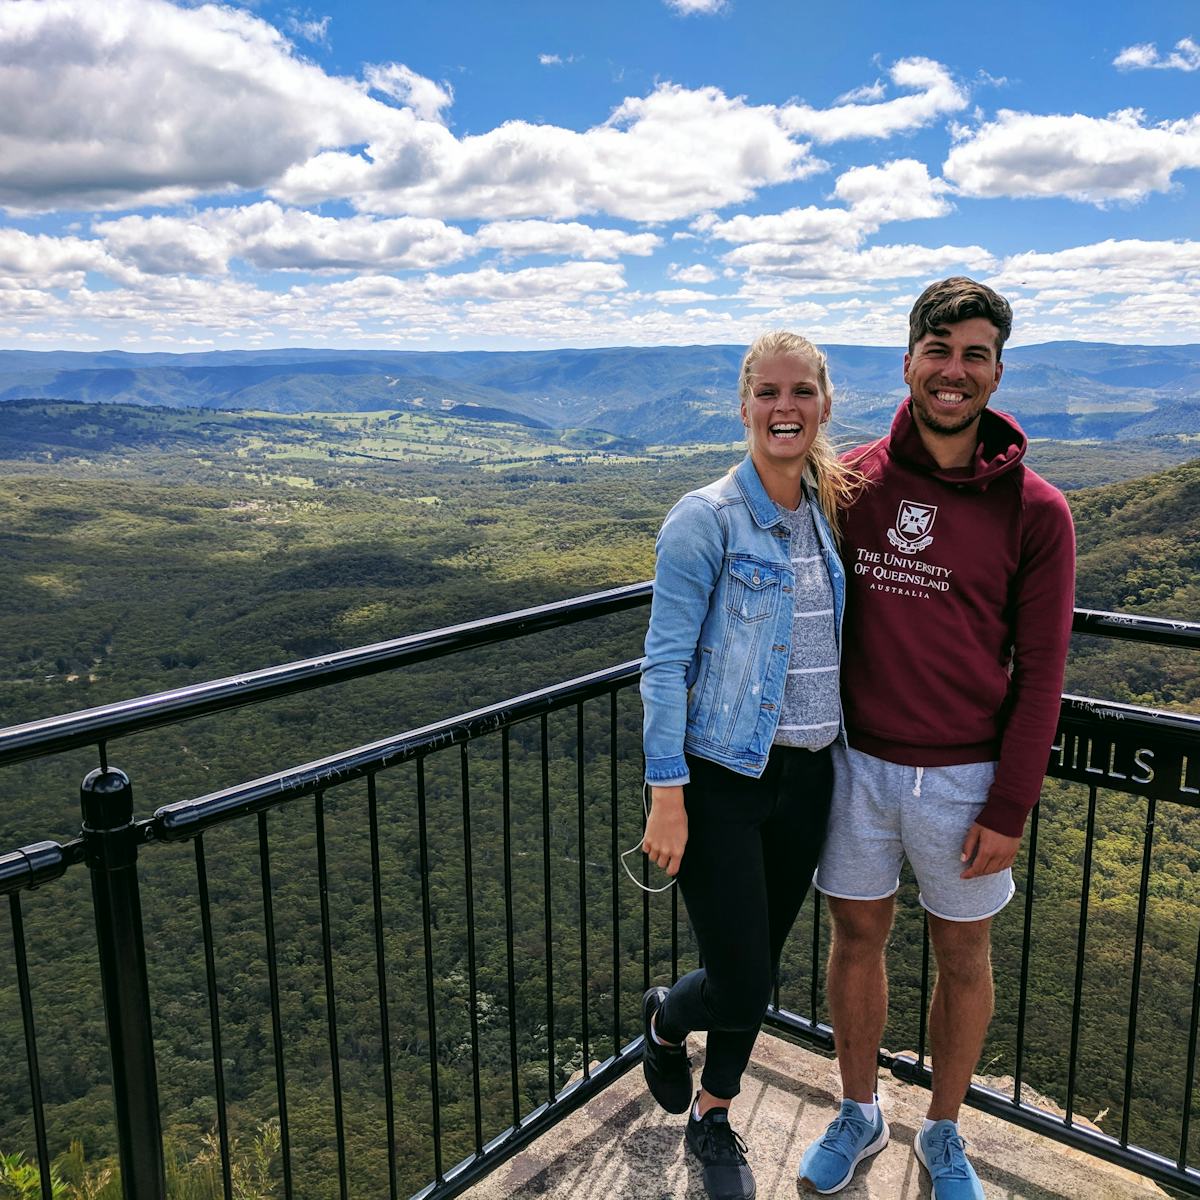 Us in the Blue Mountains, Australia (2018)